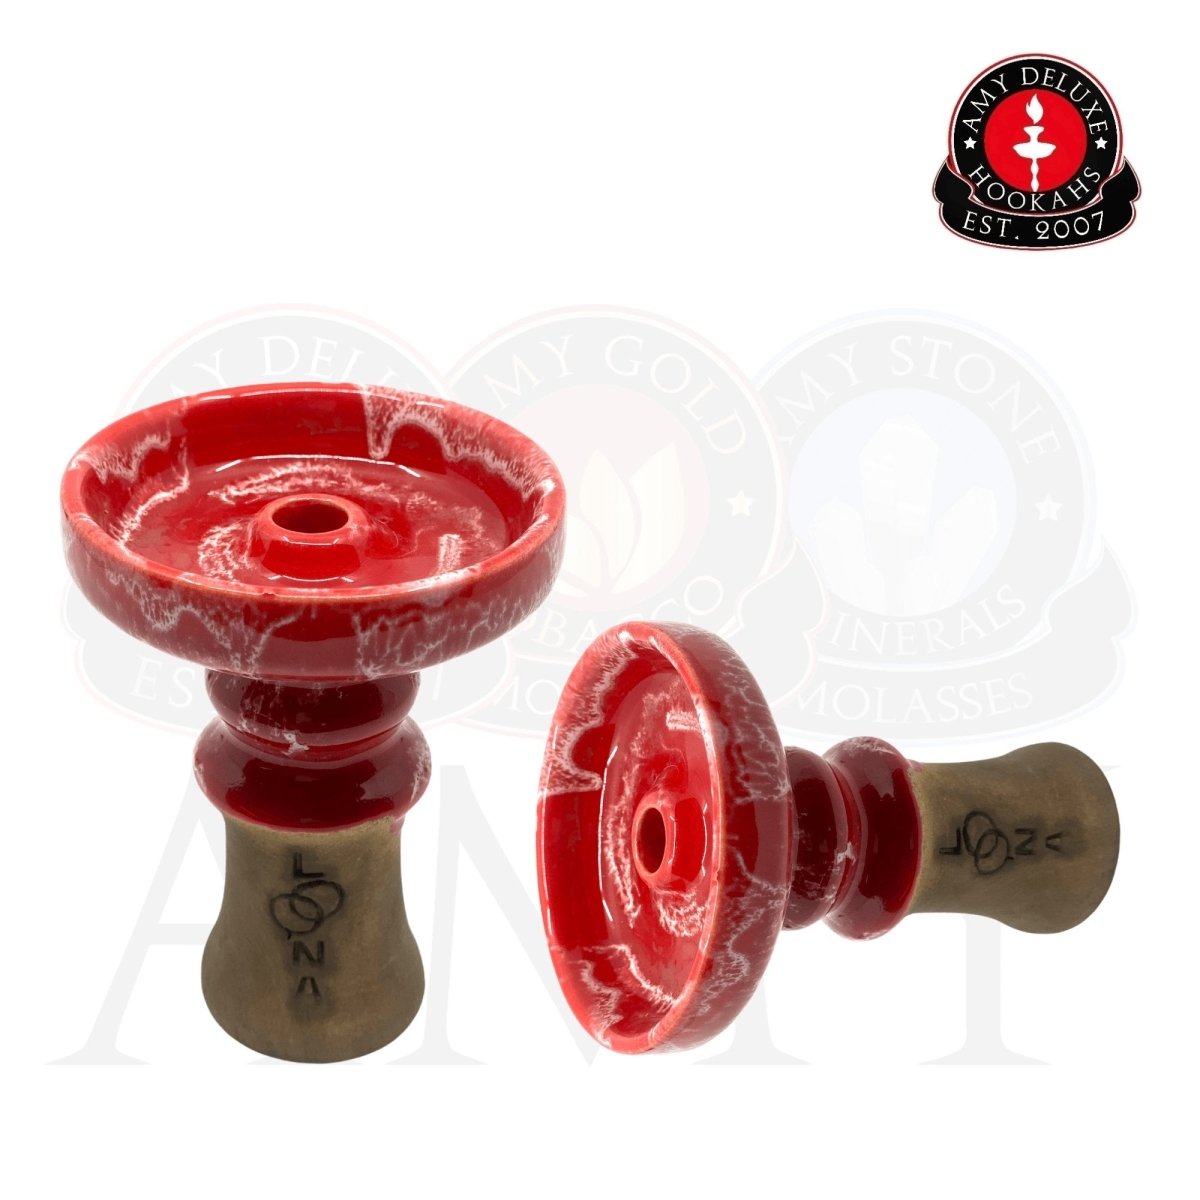 Loona Phunnel Bowl - Bloody - Amy Shop - Keramisk phunnel hoved til vandpibe i rød